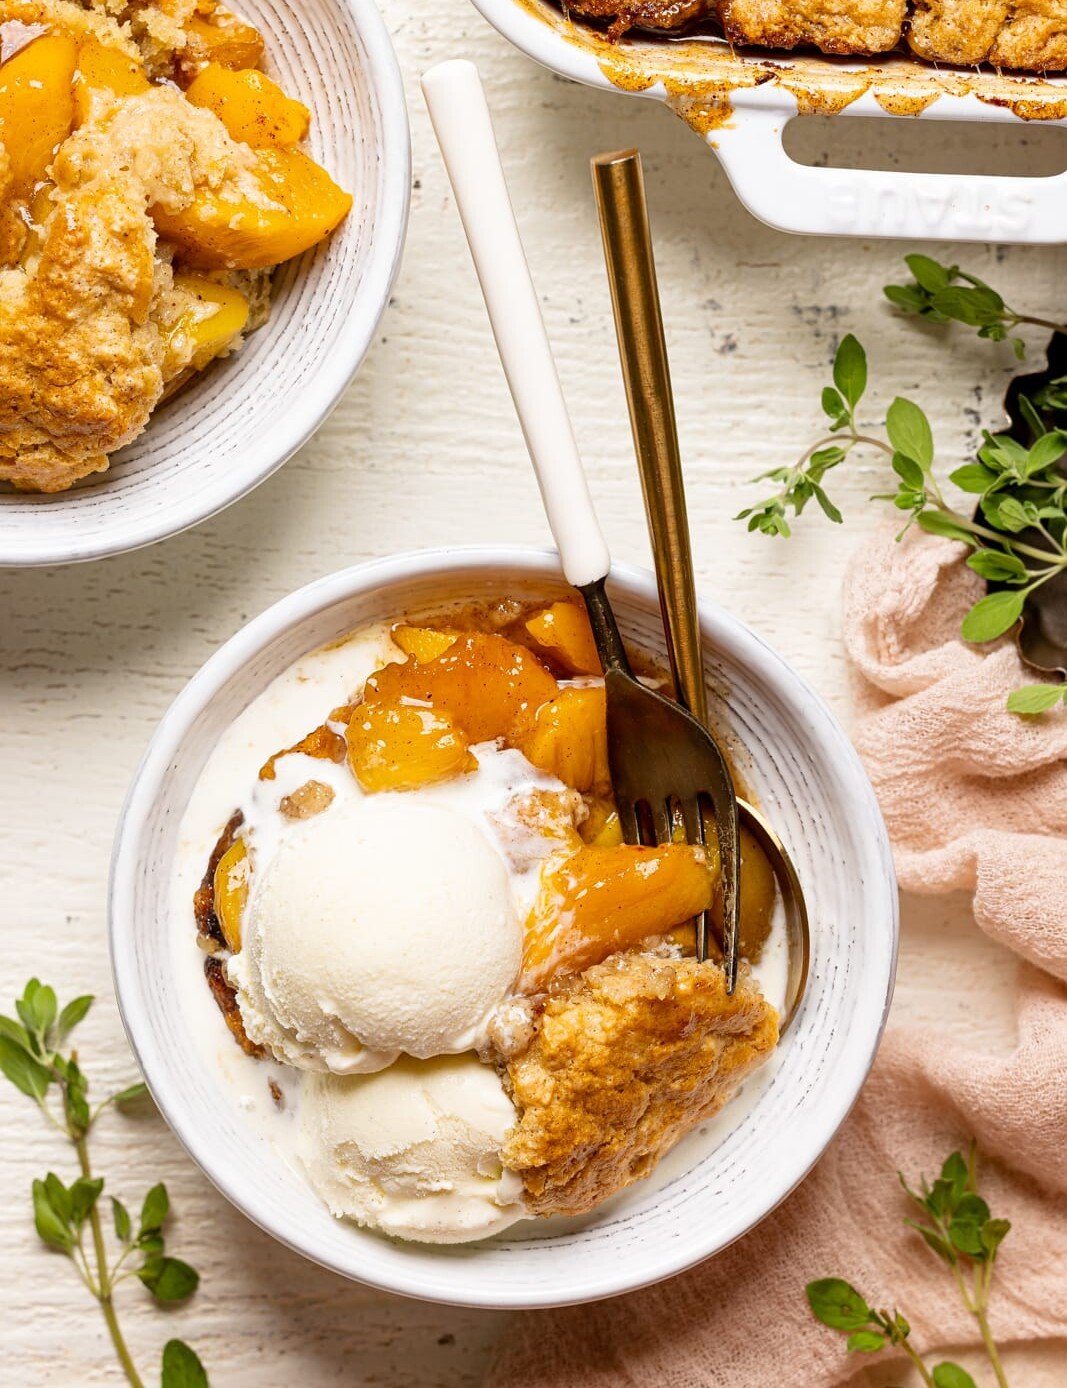 Easy Peach Tea Recipe (Use Fresh or Frozen Peaches)